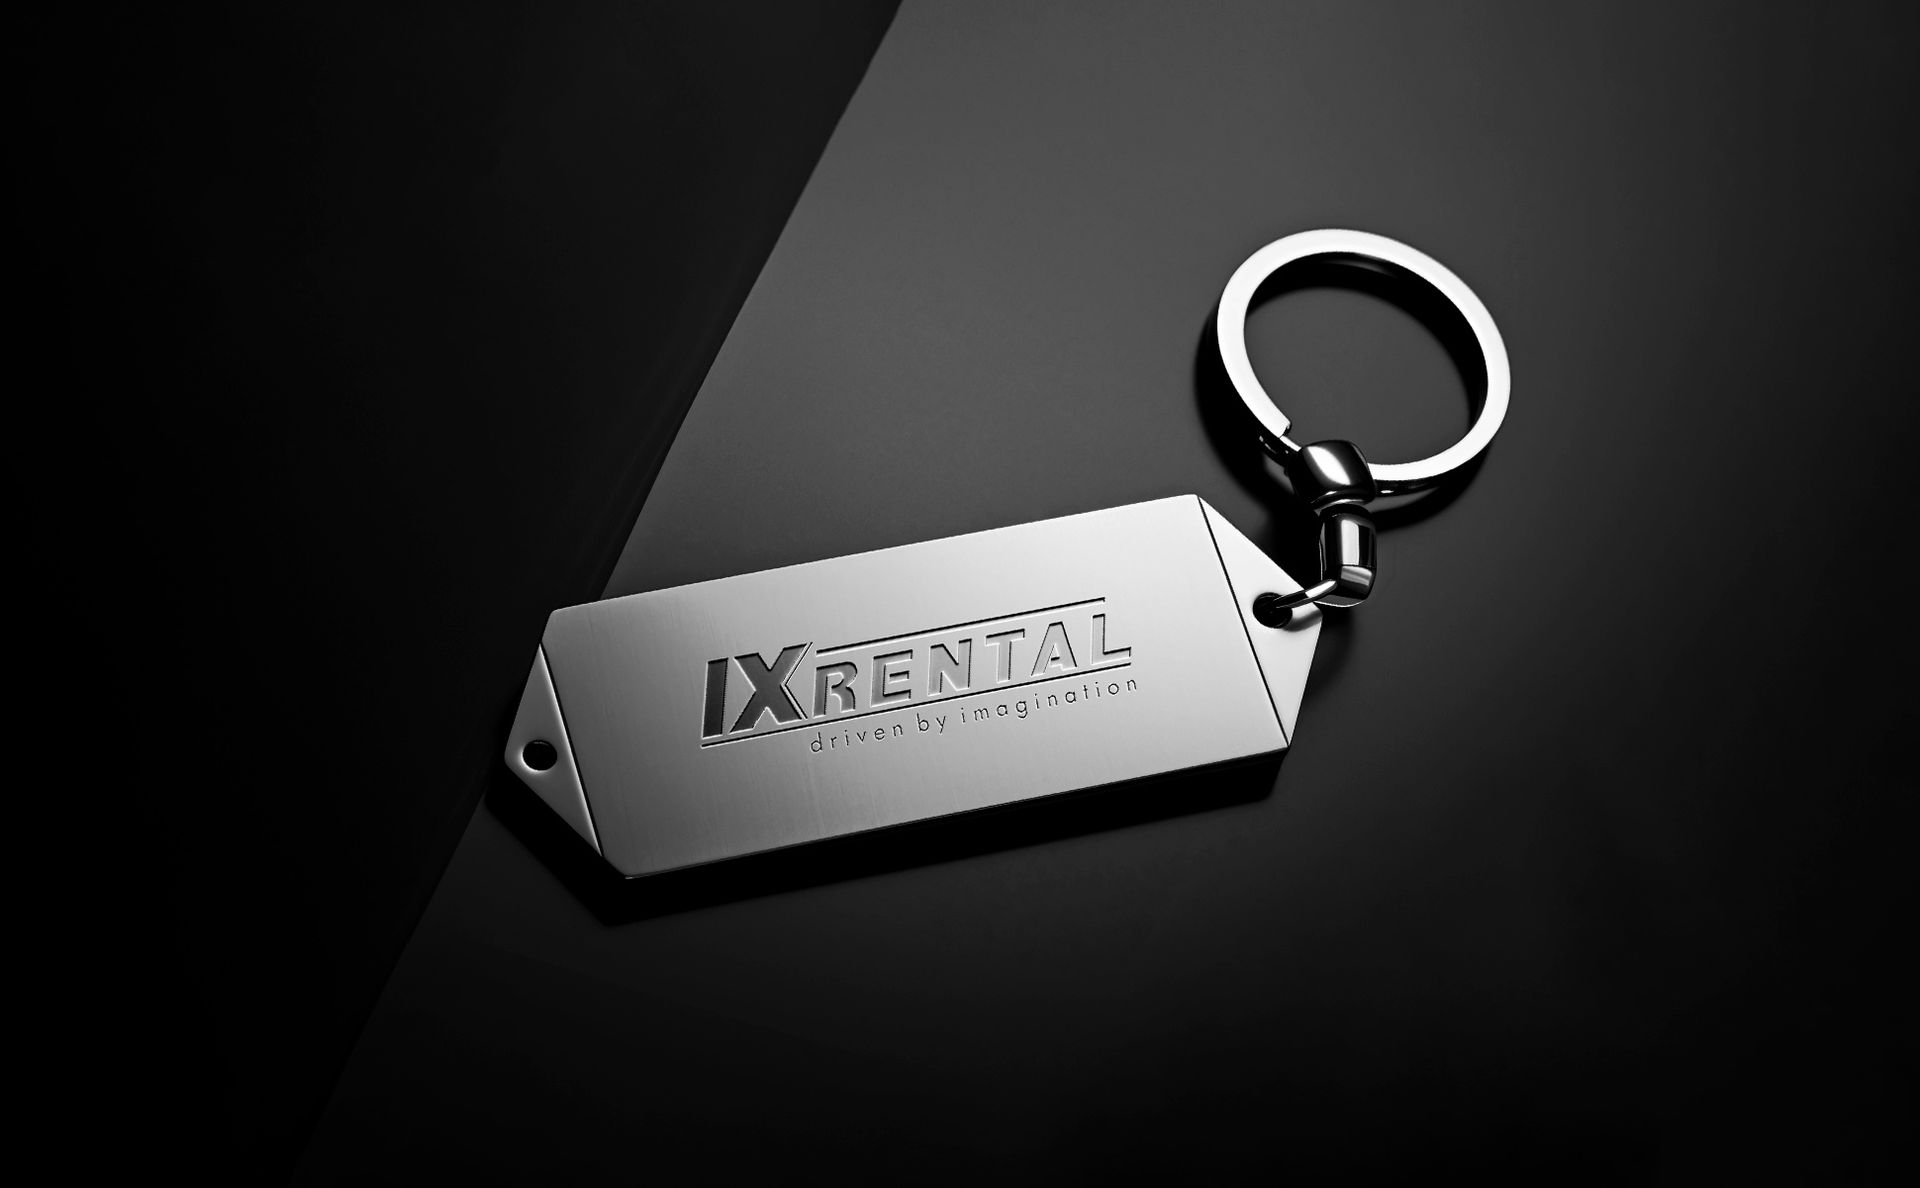 A IX Rental keychain wth the IX Rental logo printed on it